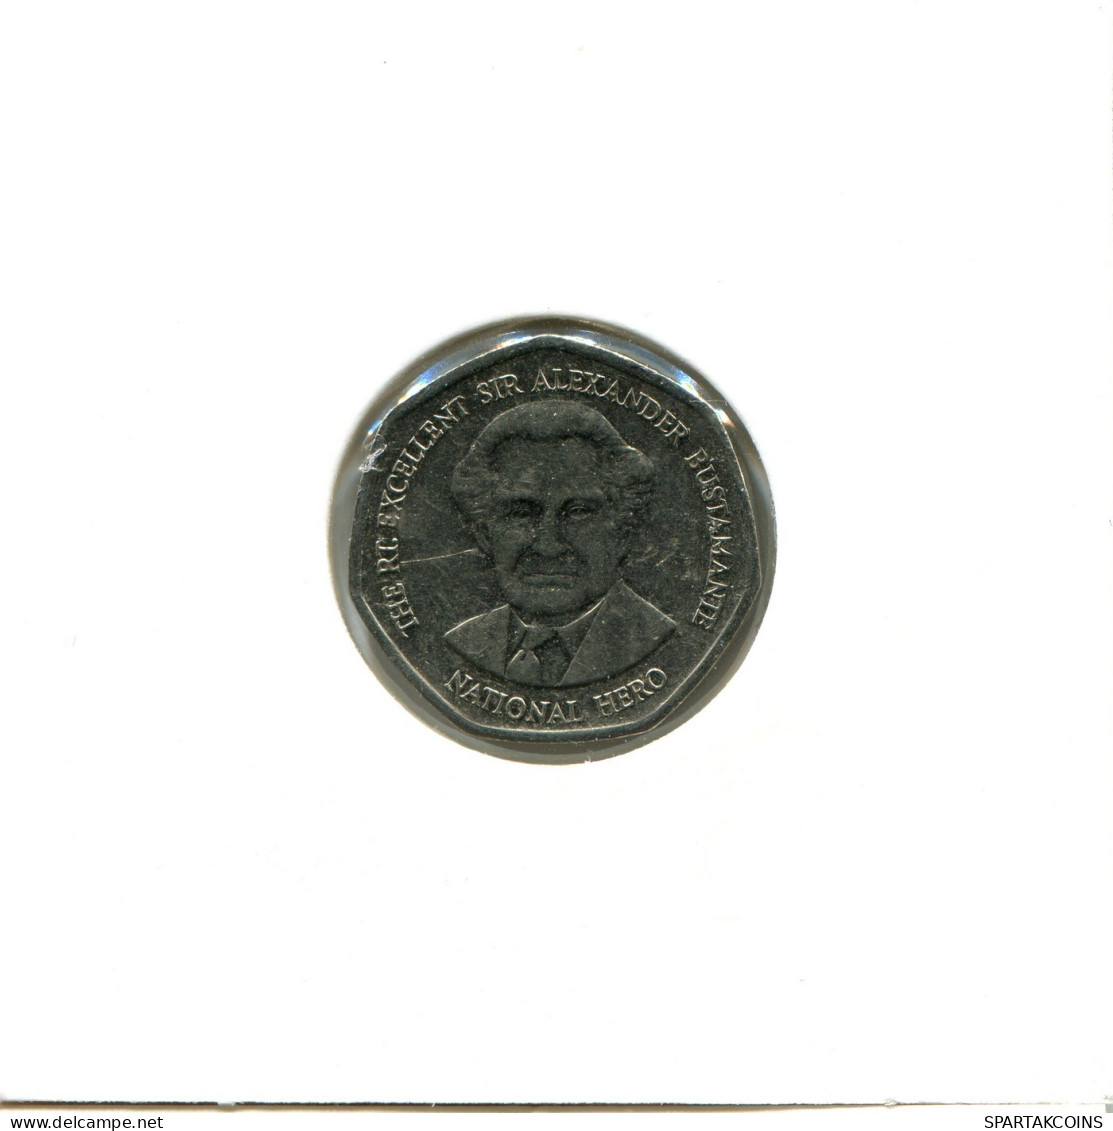 1 DOLLAR 1996 JAMAICA Coin #AX867.U.A - Jamaique